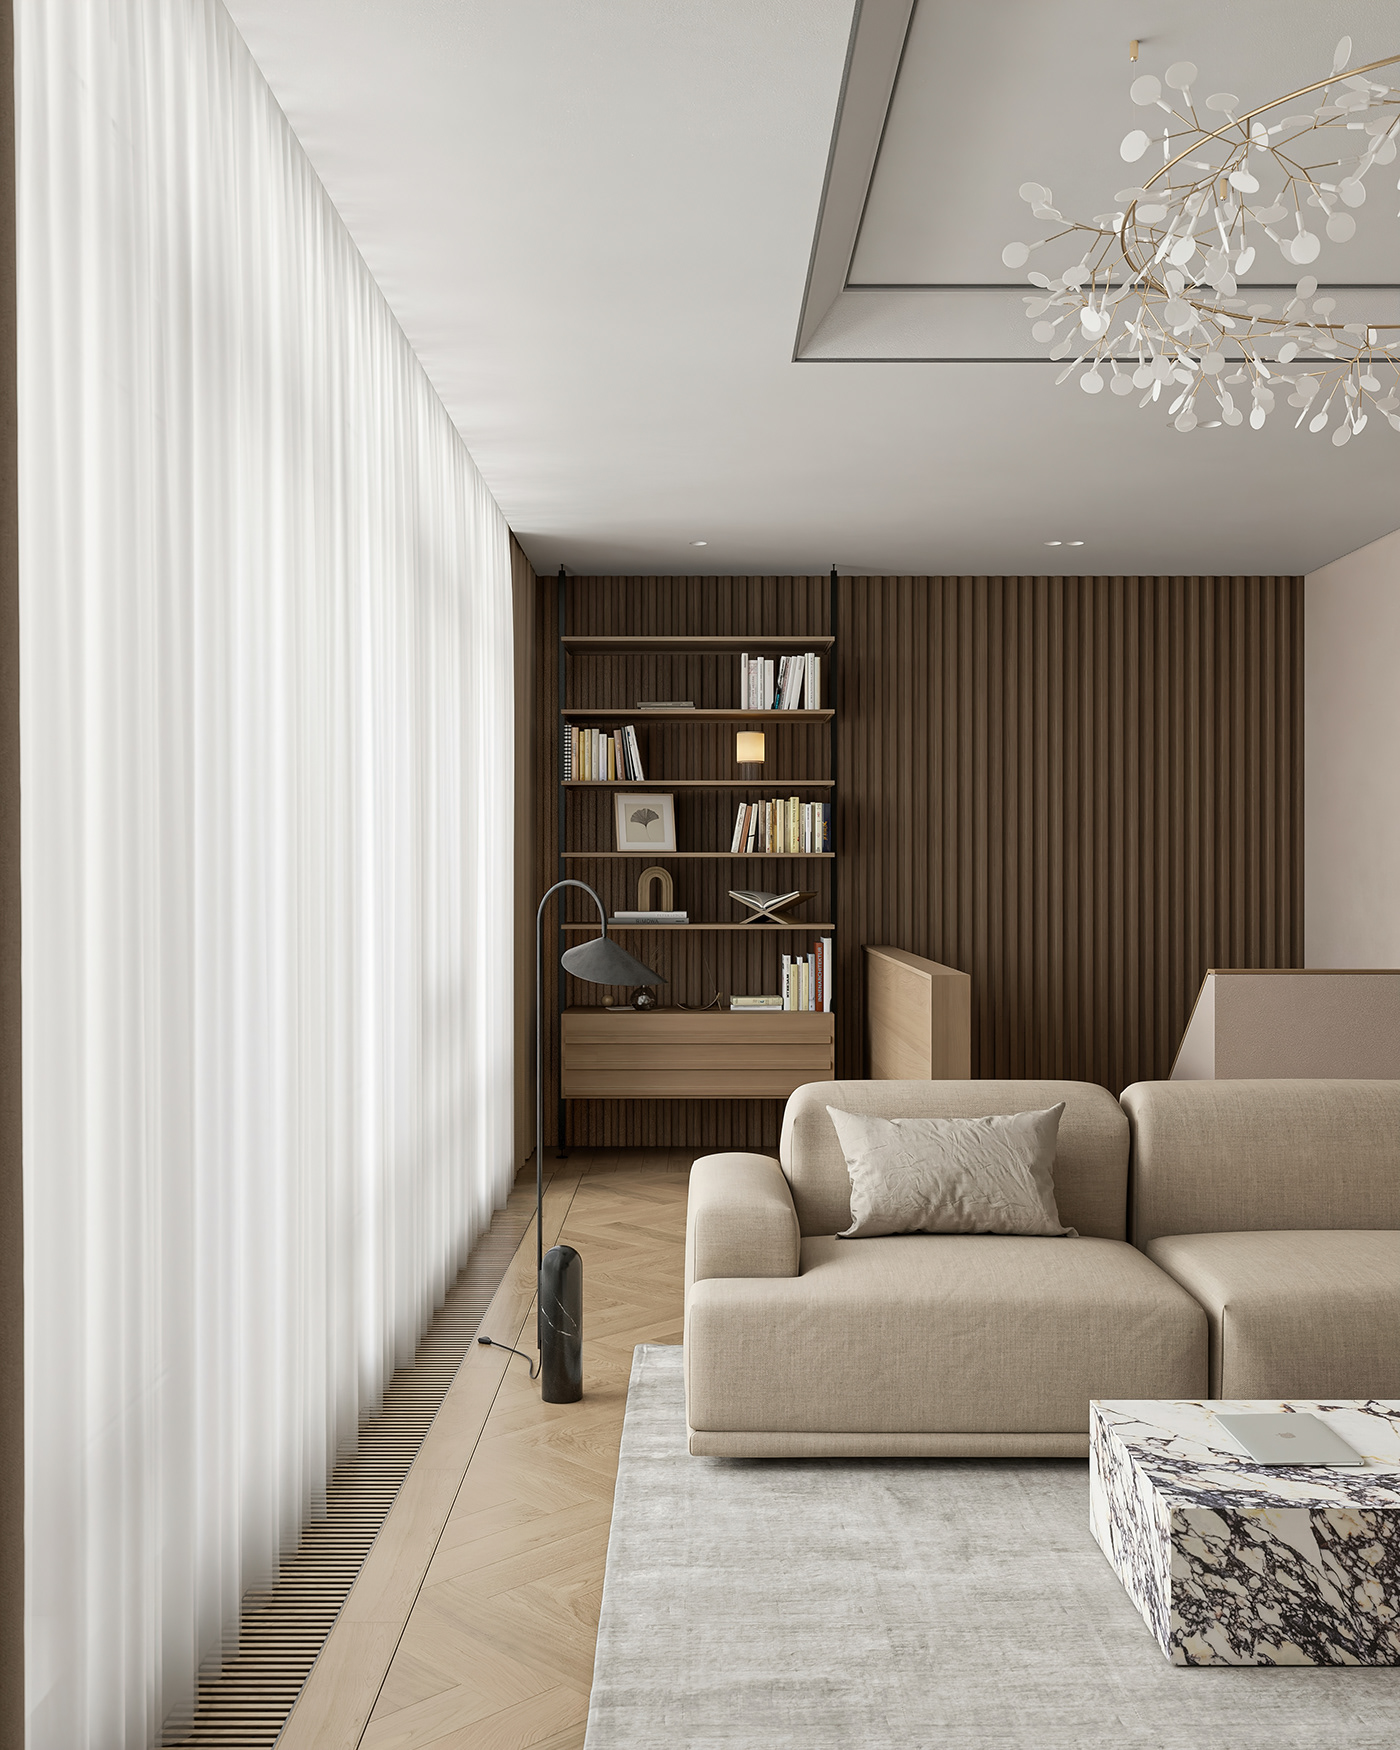 3dvisualization Renders interior design  archviz kitchen design living room visualization 3drender rendering CoronaRender 